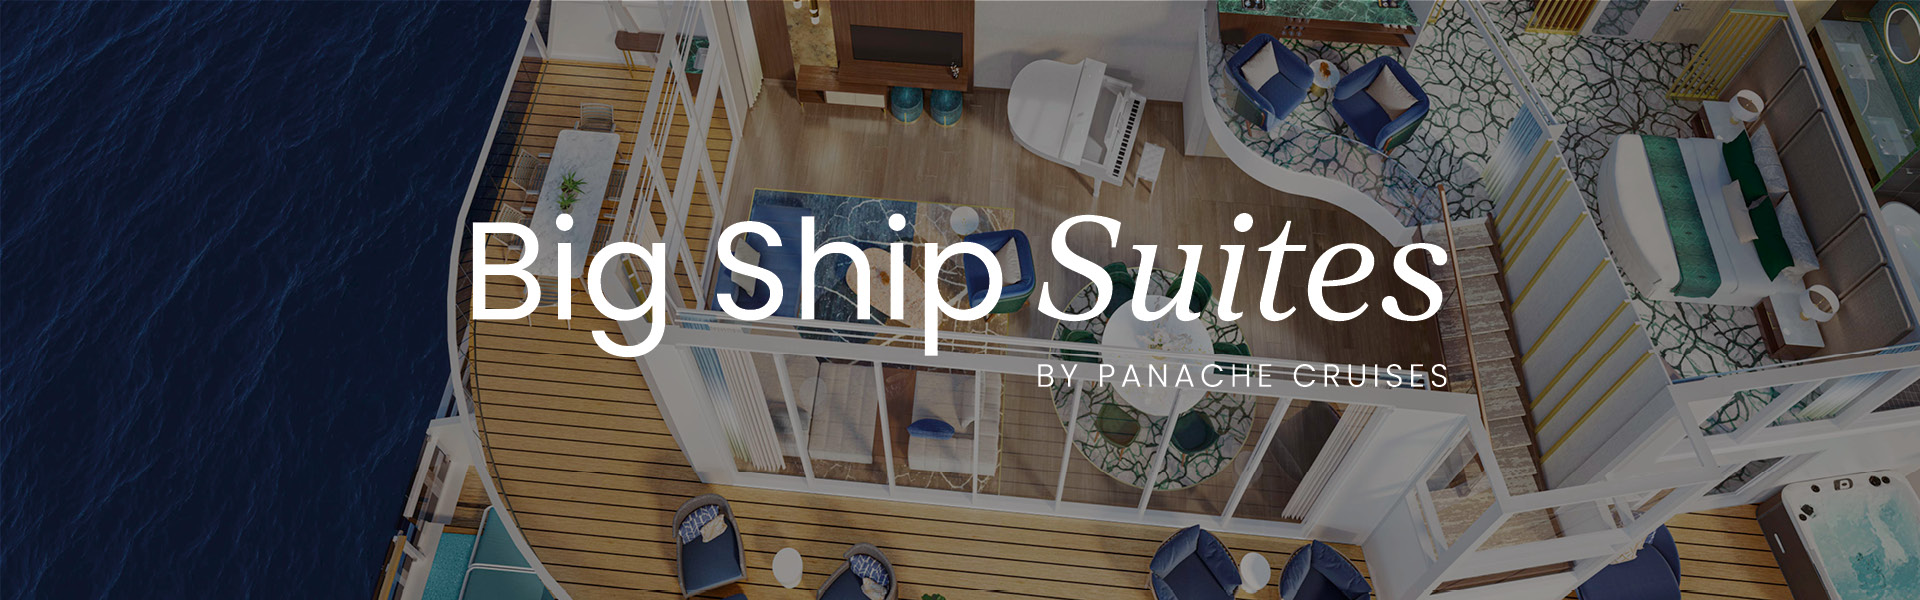 Big Ship Suites